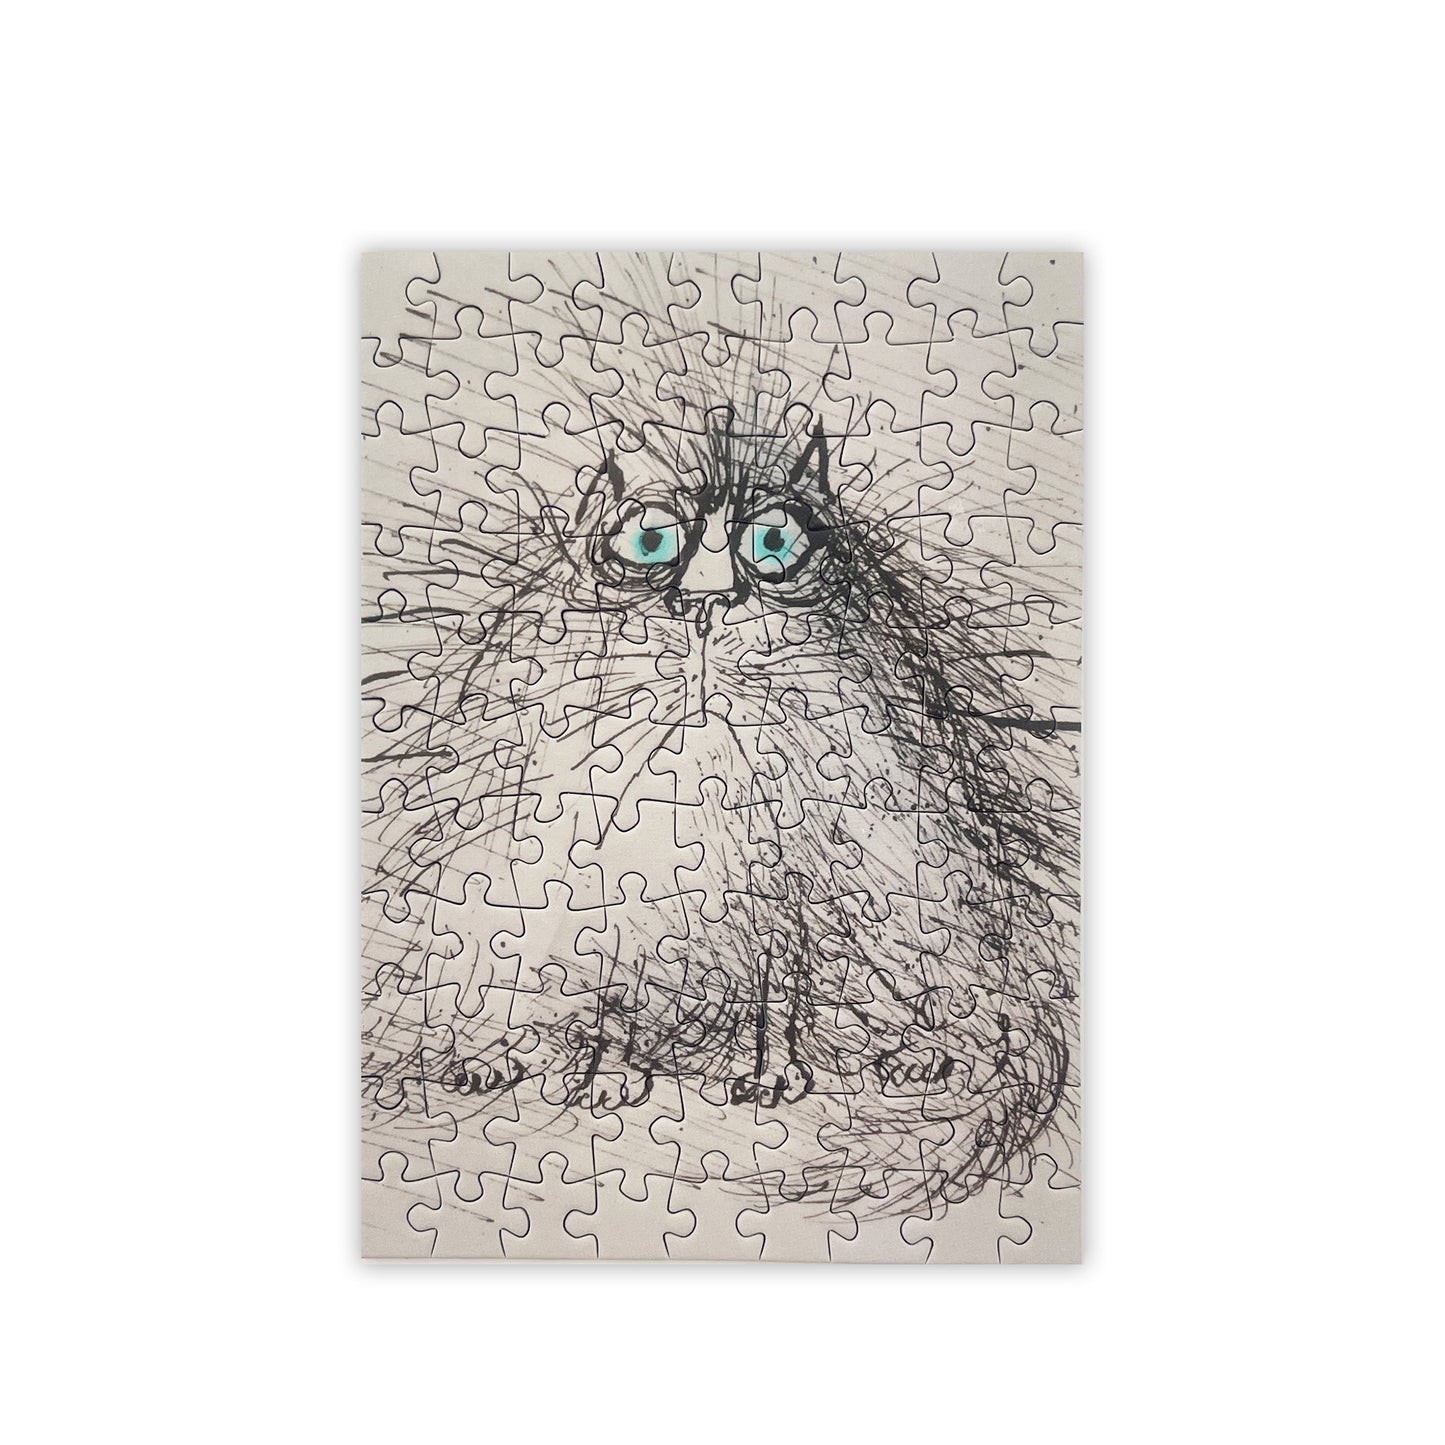 Grumpy Cat by Ronald Searle - Mini jigsaw puzzle